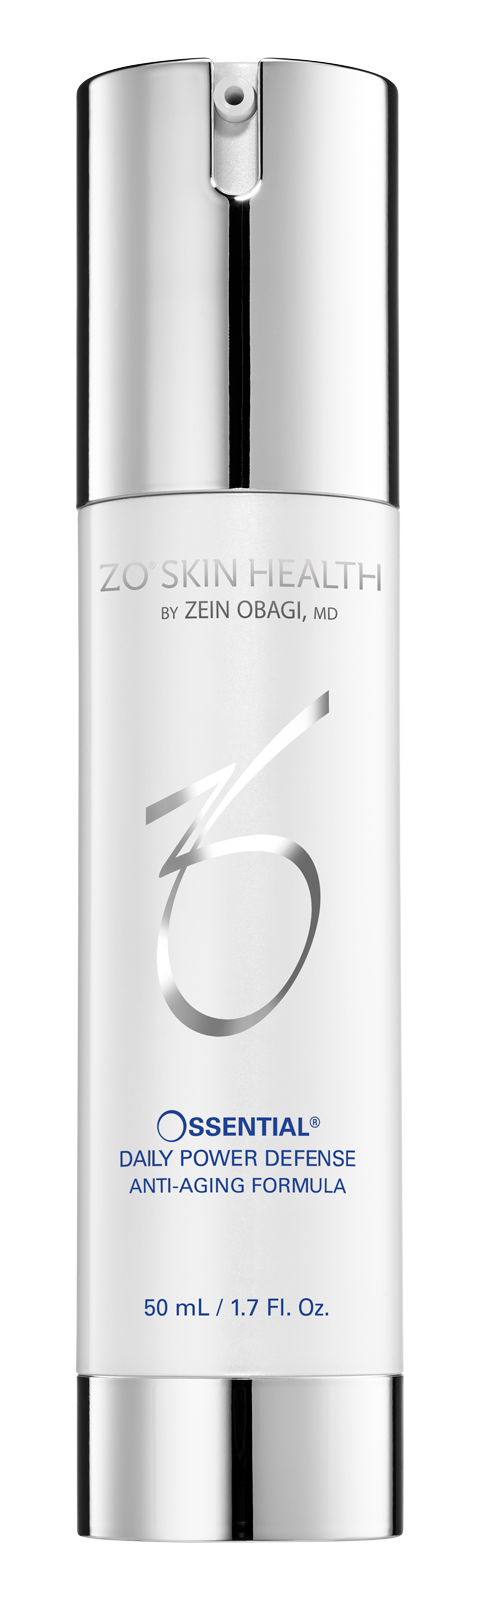 ZO skin Health skincare product